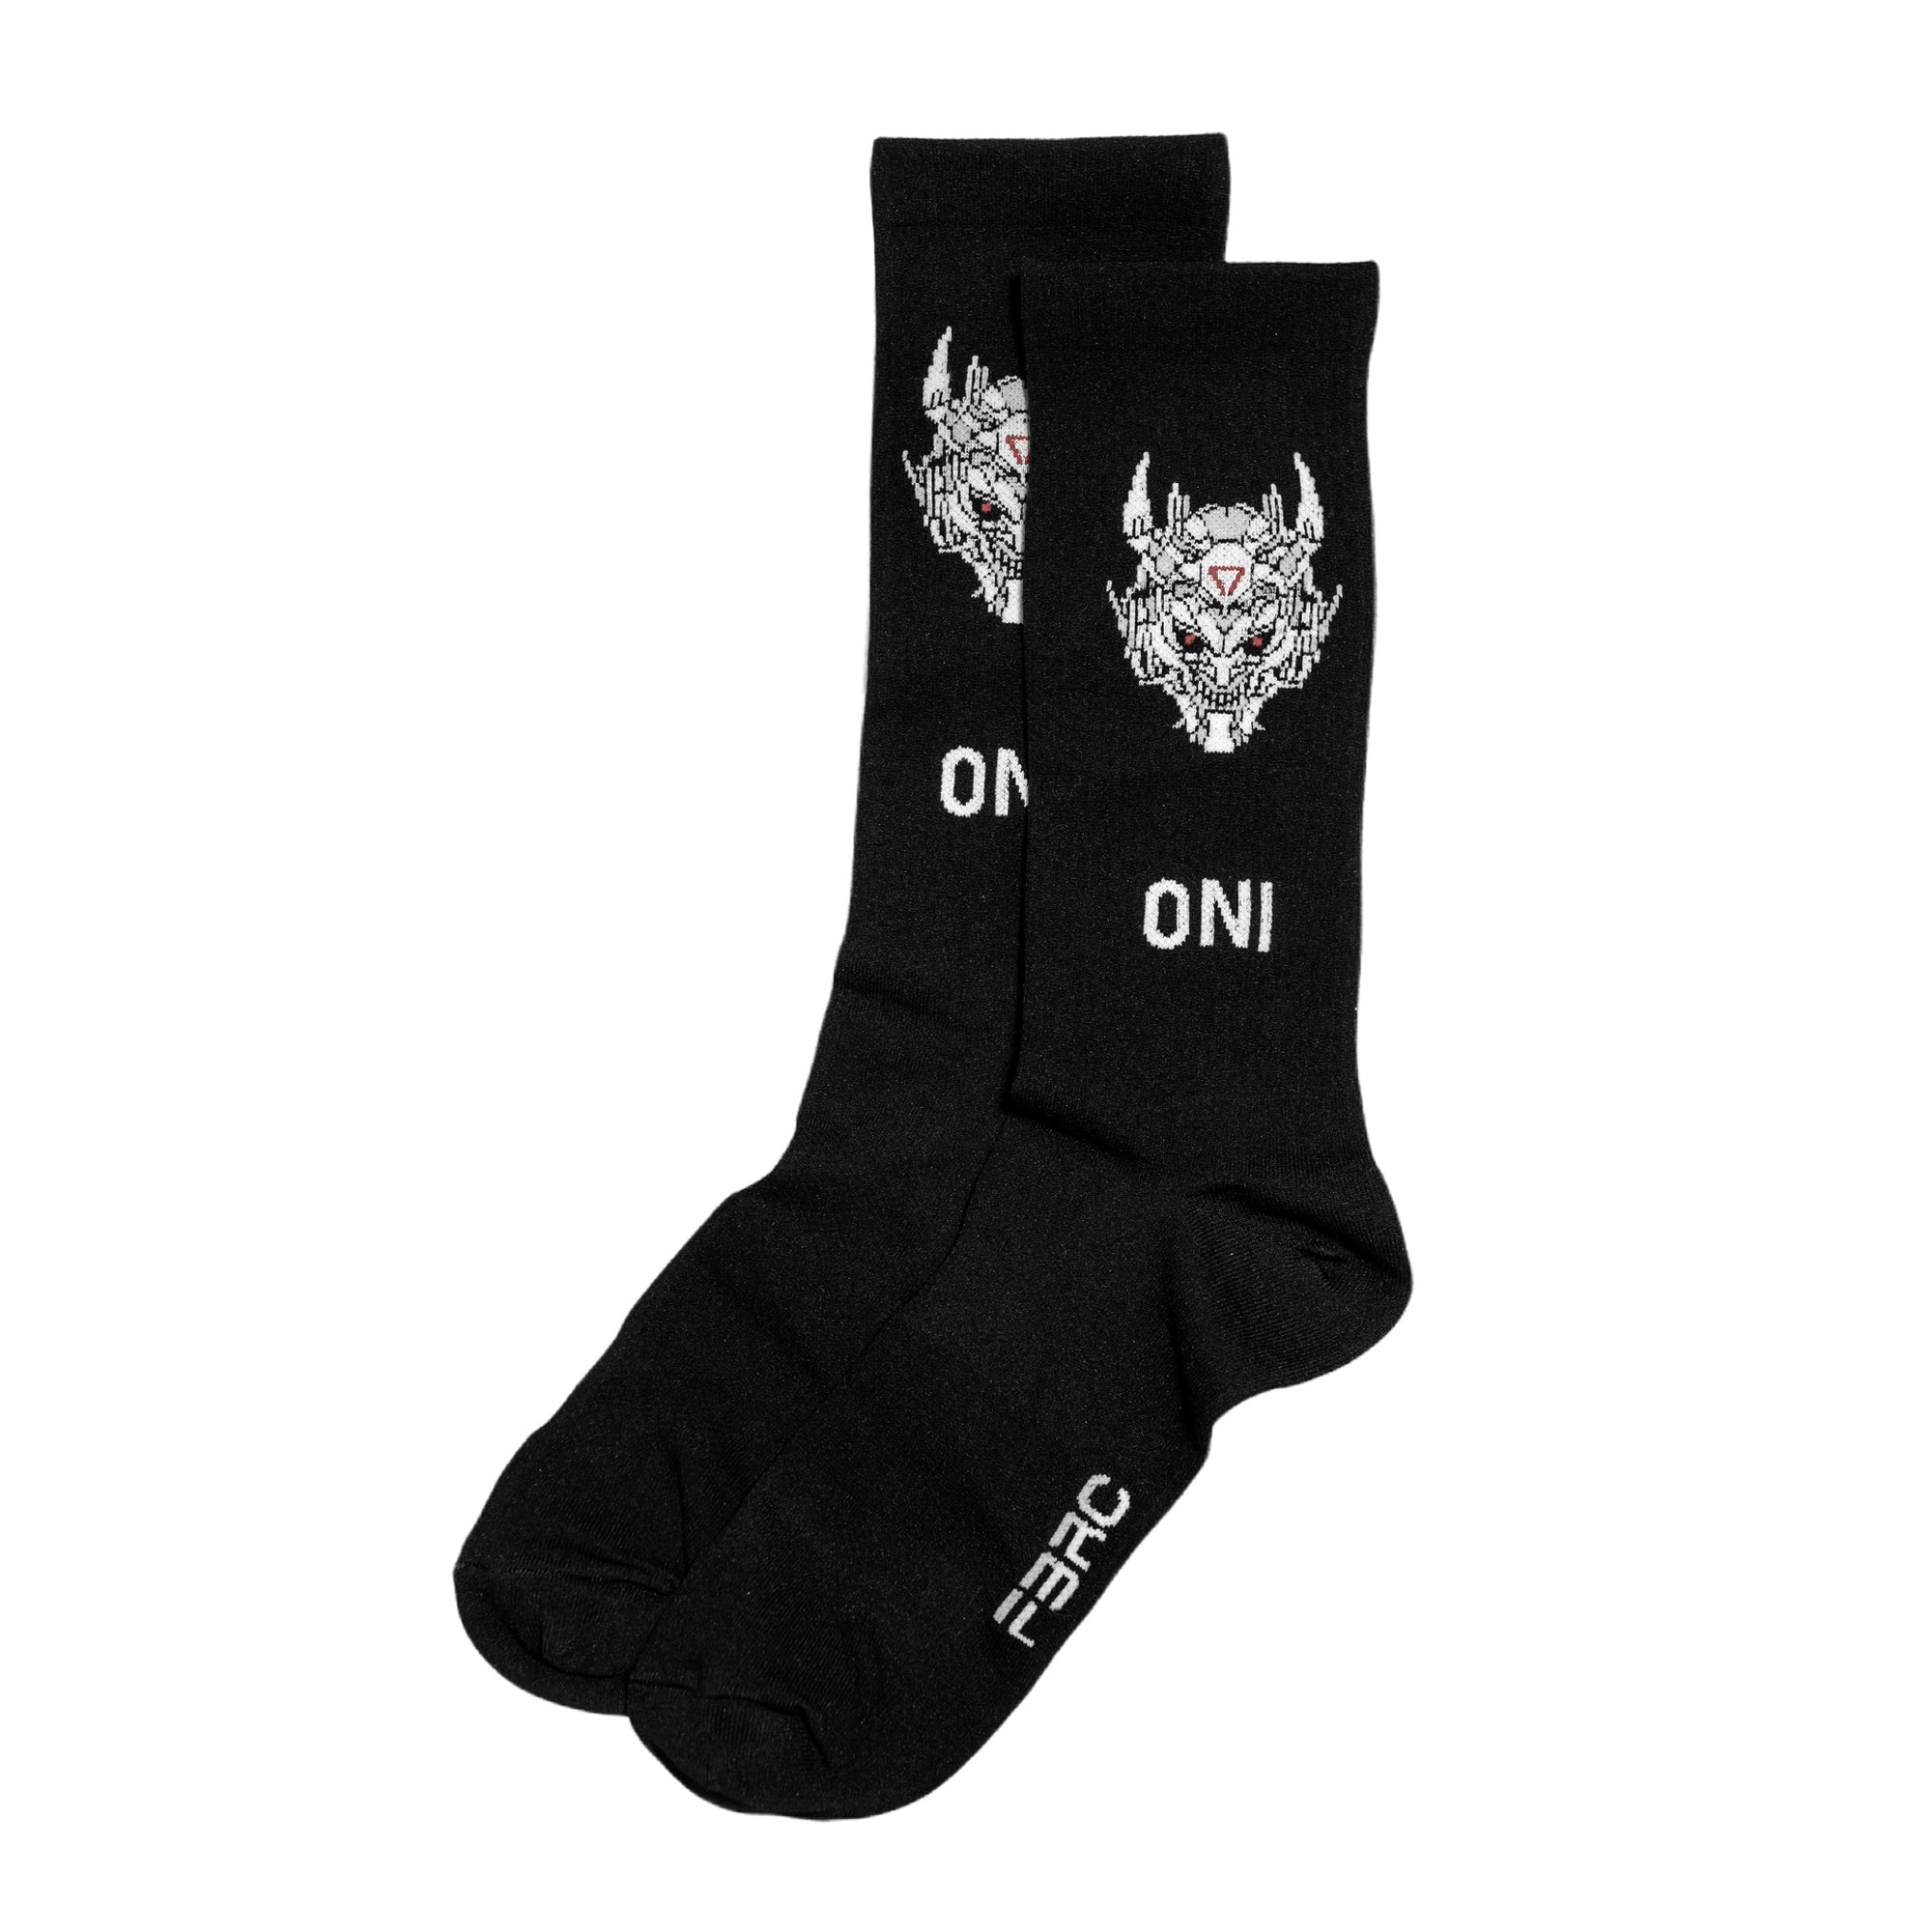 ONI Black Crew Socks